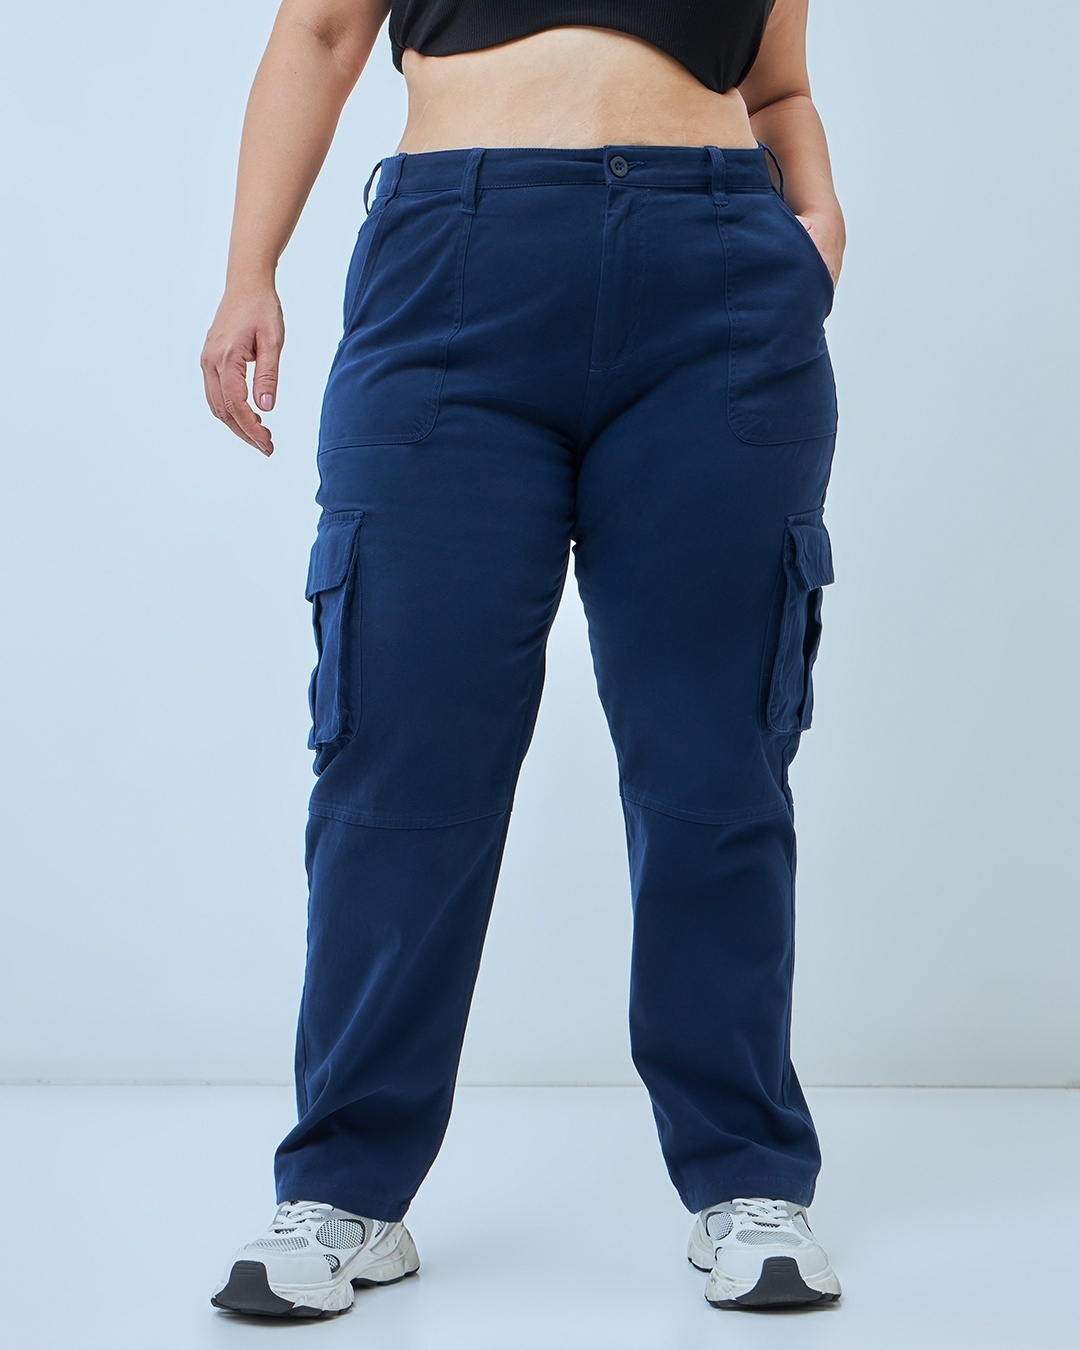 MODA NOVA Juniors Plus Size Drawstring Elastic Waist Stacked Cargo Pants  Army Green 2X - Walmart.com